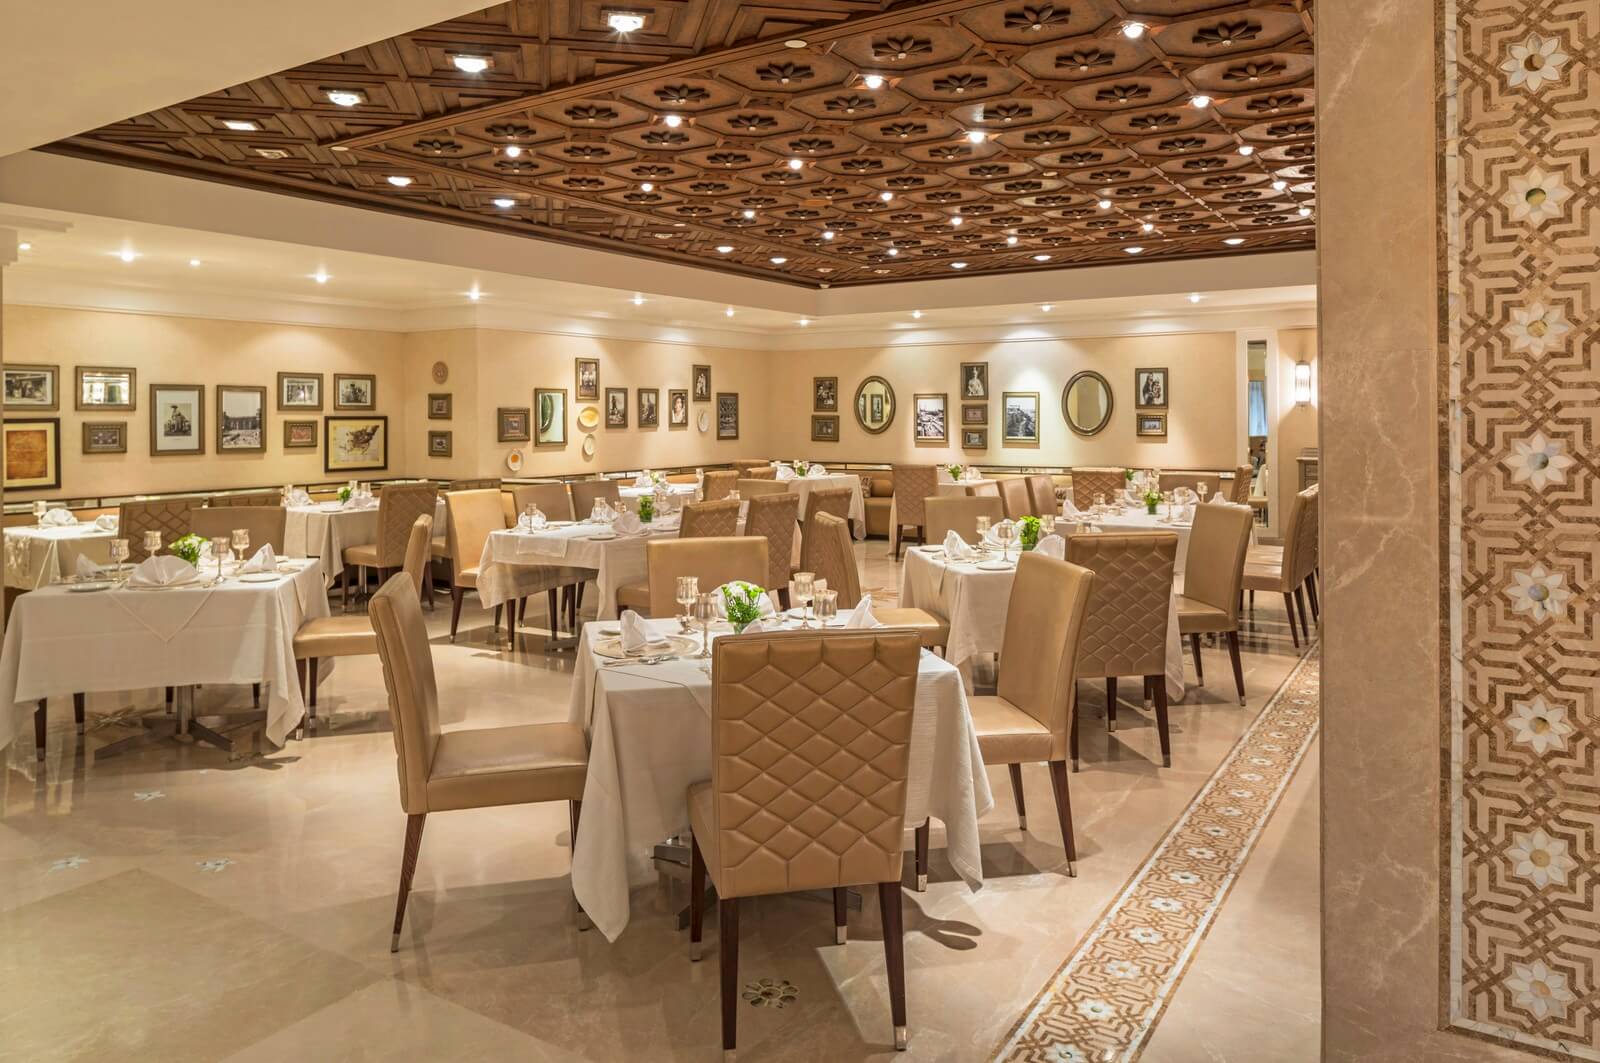 Aish Restaurant Interior at The Park Hotels Hyderabad